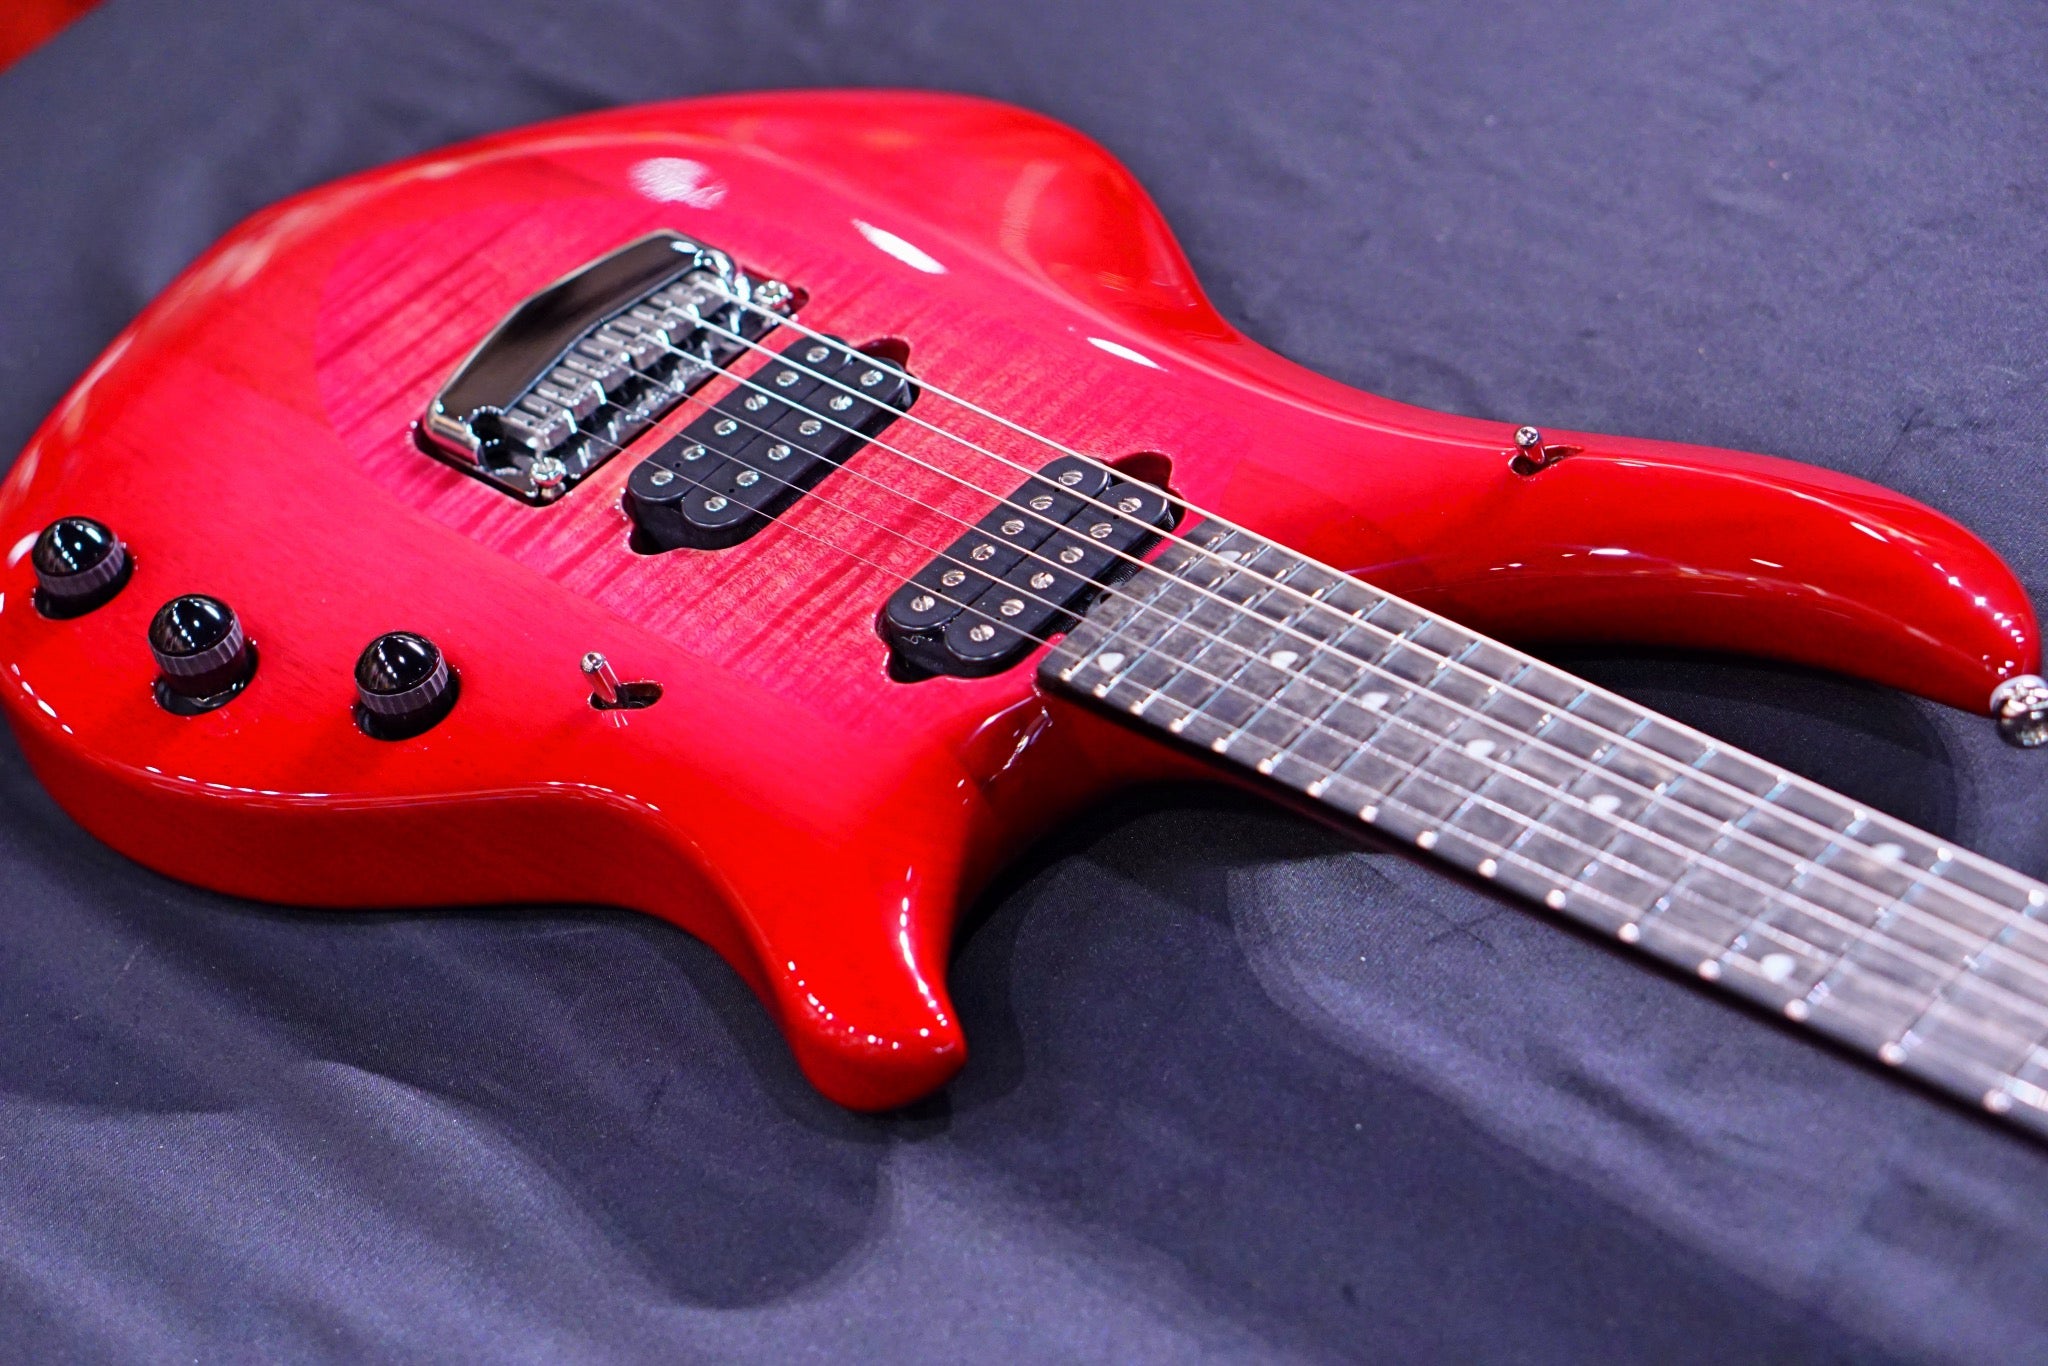 Ernie Ball Music Man Majesty John Petrucci Signature Electric Guitar - Pink Sand M013617 - HIENDGUITAR   Musicman GUITAR